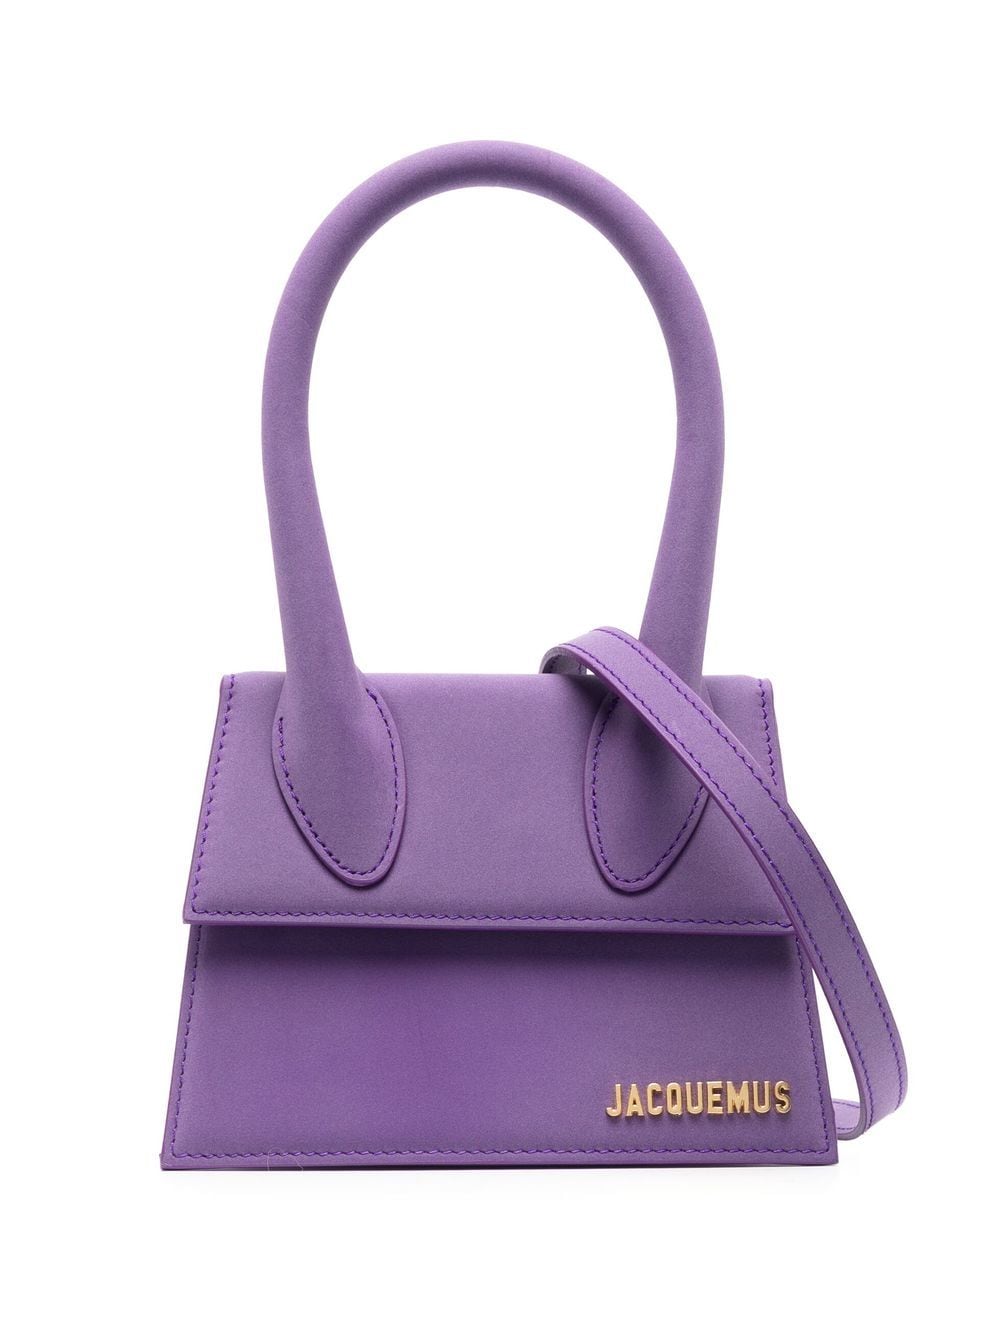 Jacquemus Le Chiquito Moyen Tote Bag - Farfetch